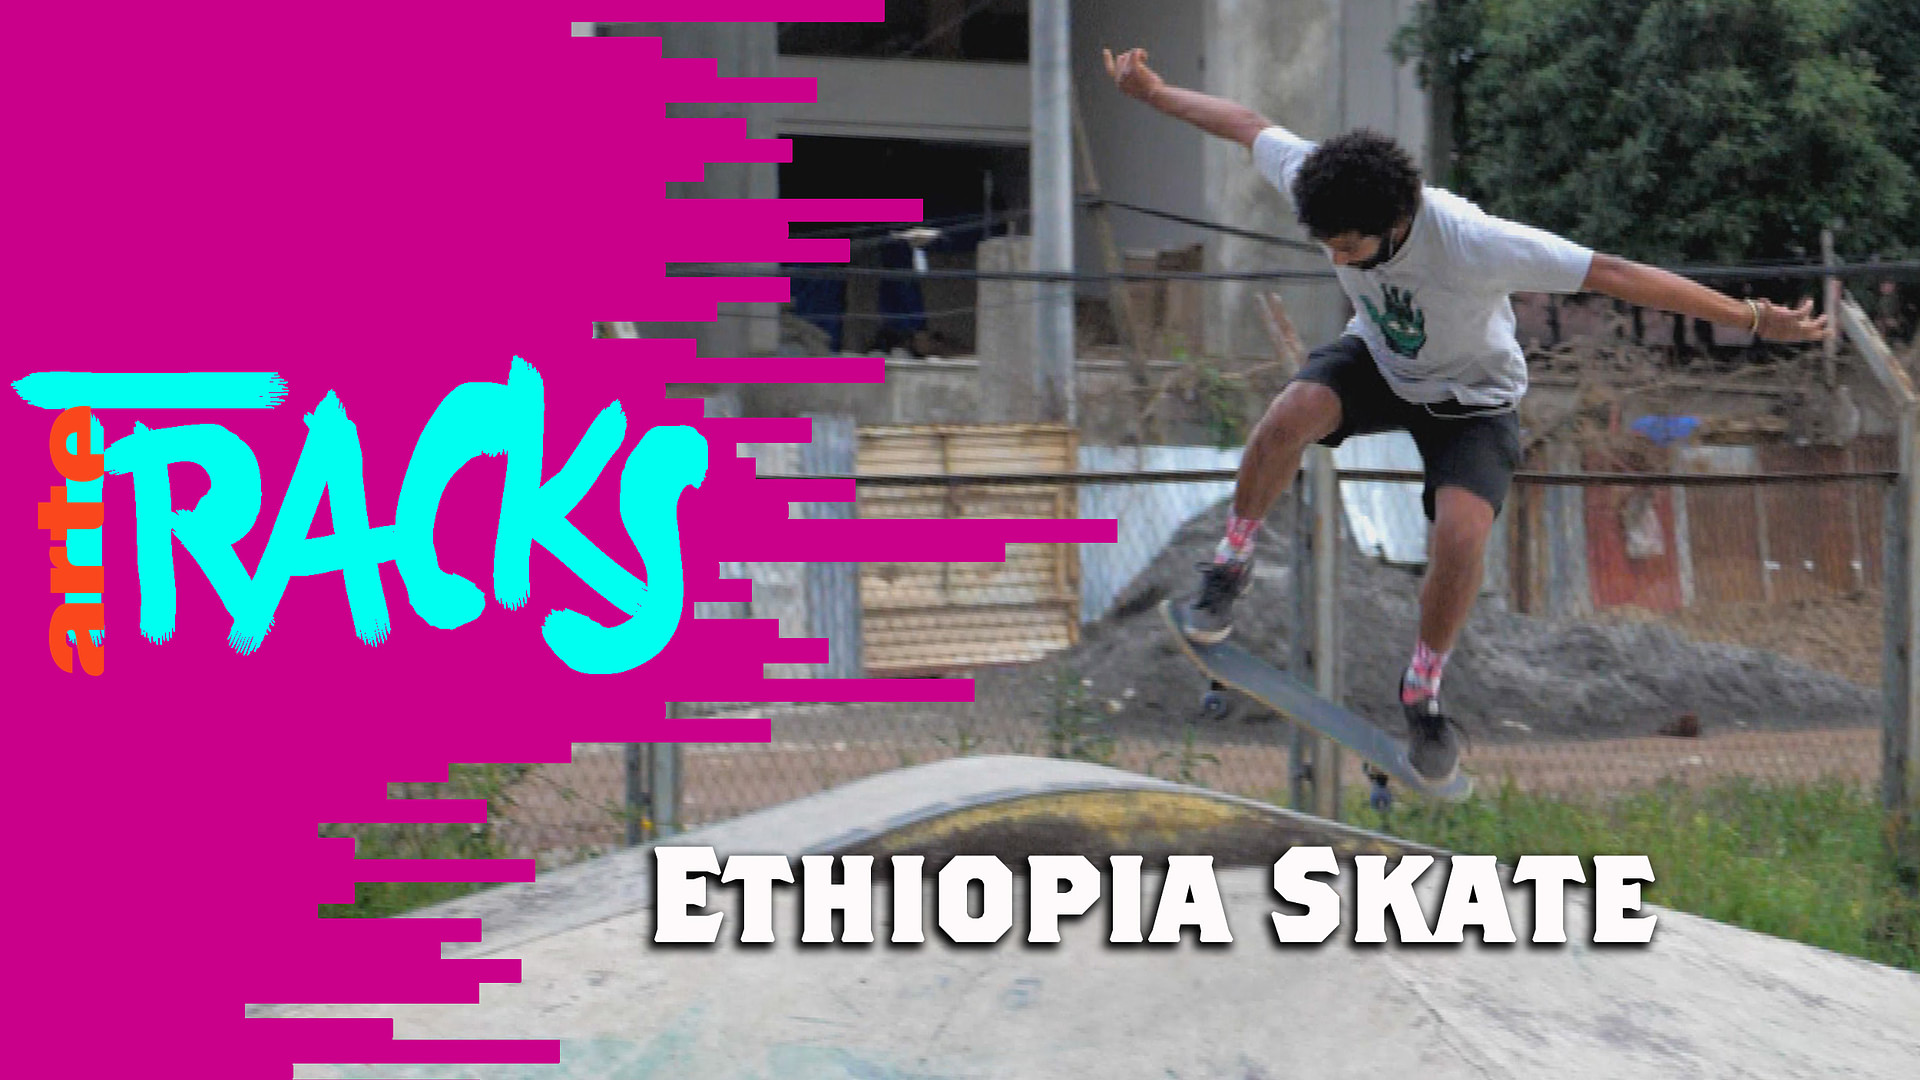 Ethiopian Skate | TRACKS